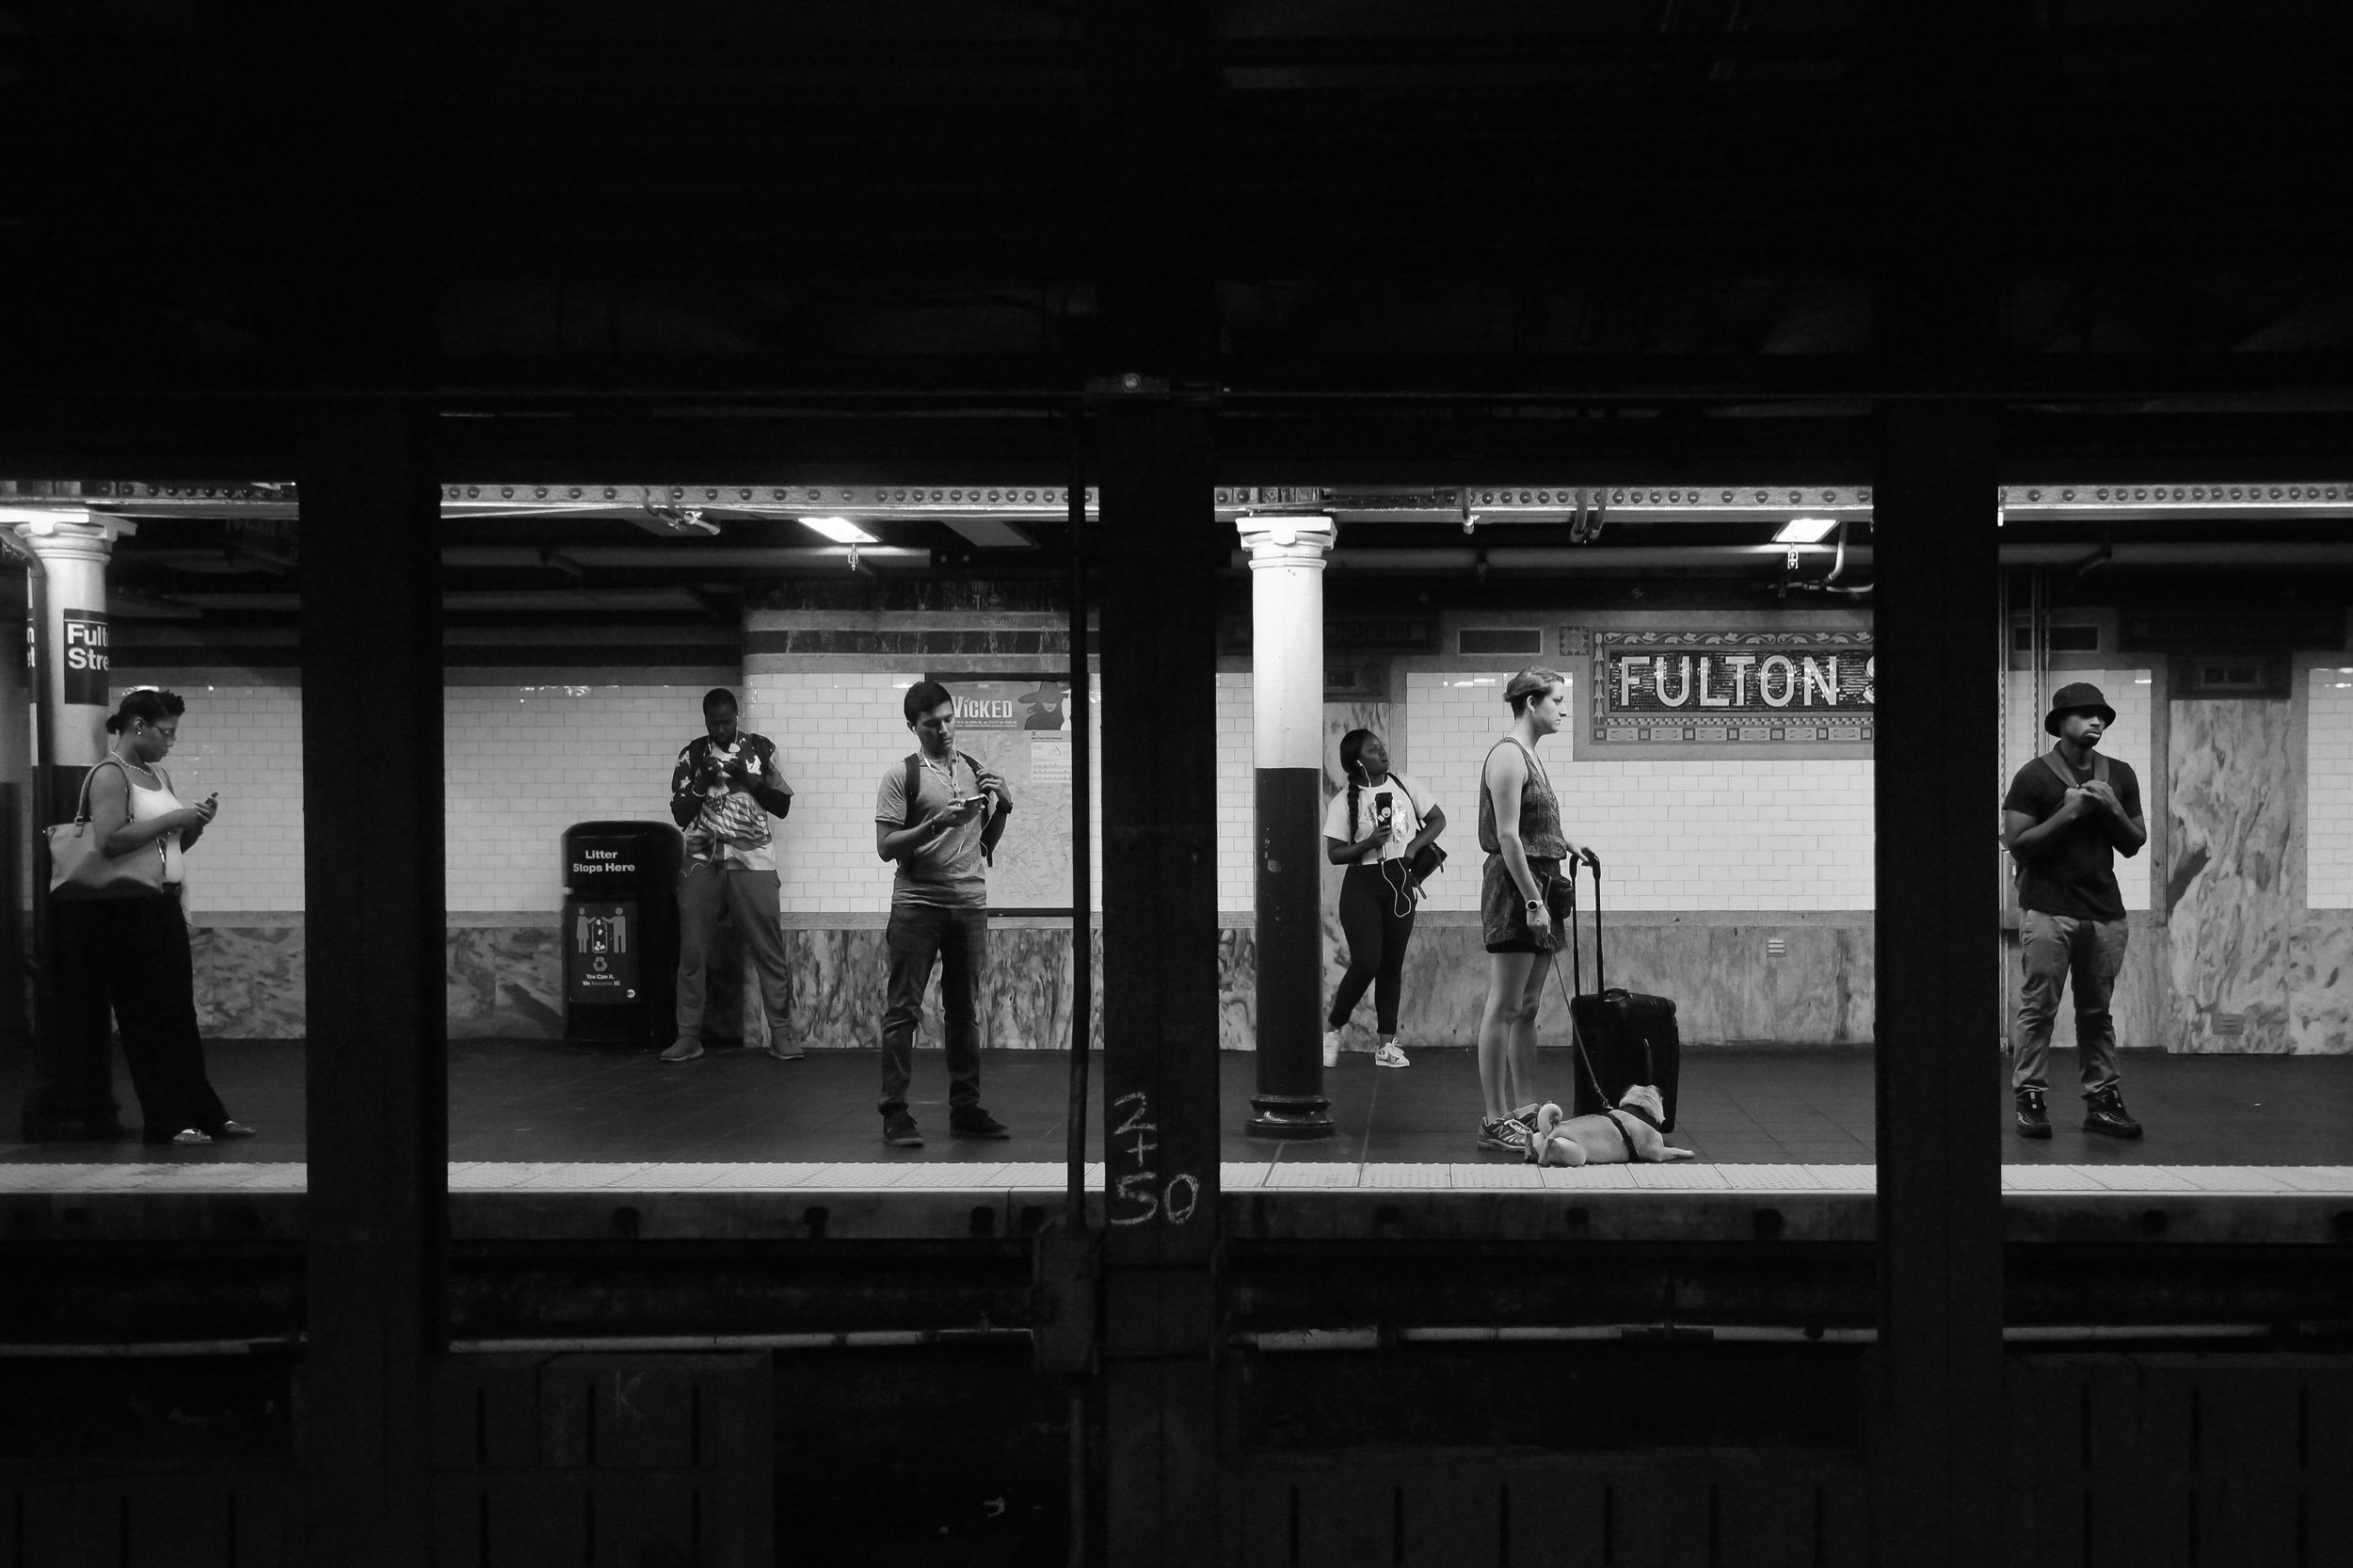  Fulton Station, New York City, 2018 